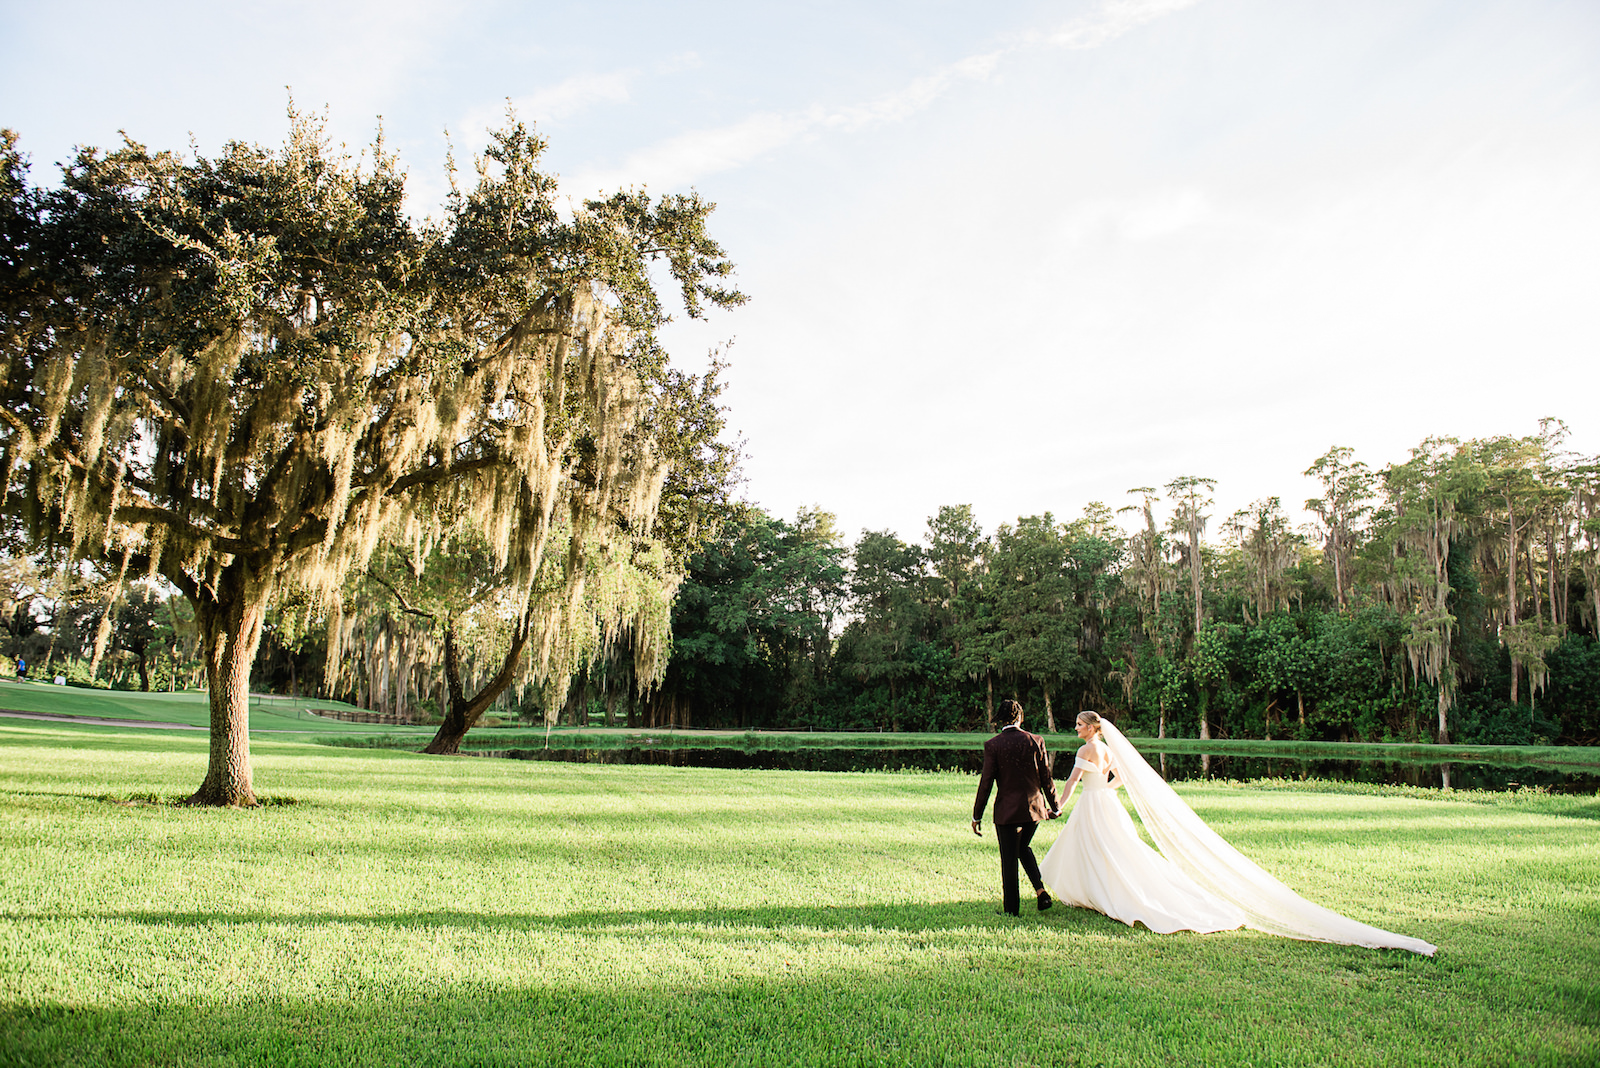 Bride and Groom Outdoor Wedding Portrait | Florida Photographer Joyelan Photography